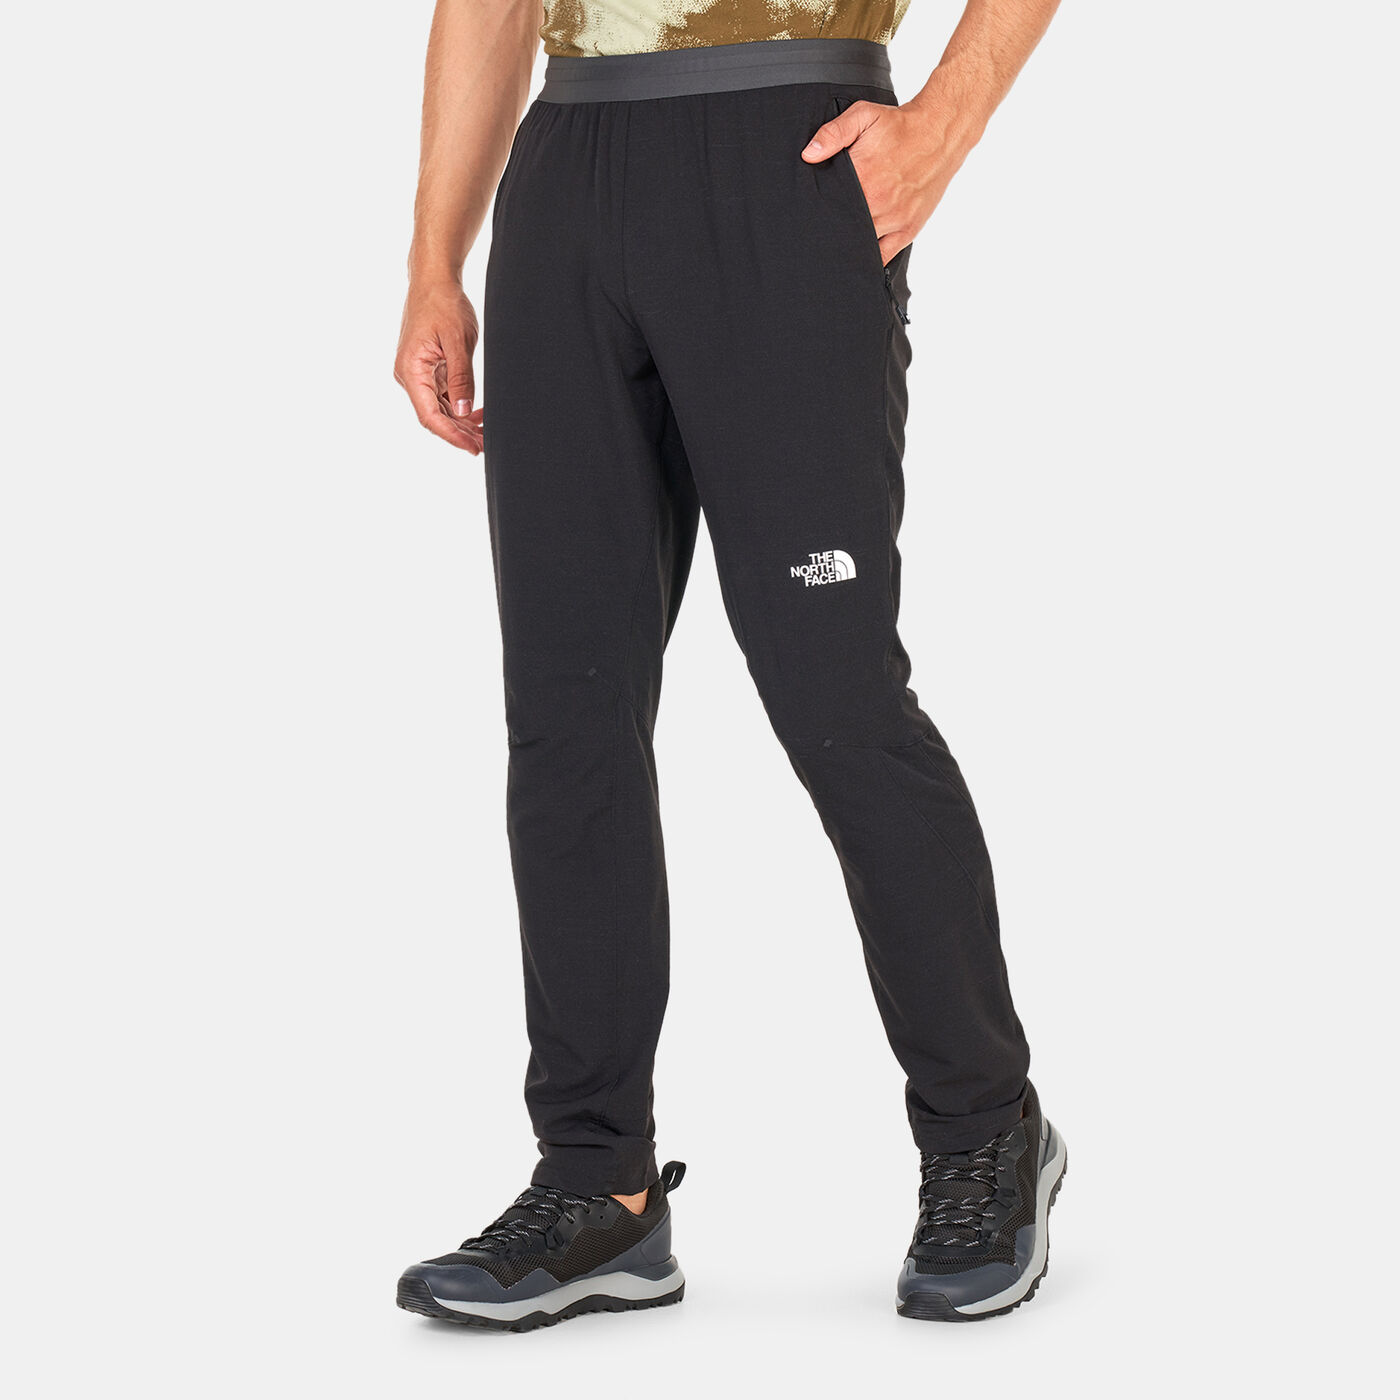 Men's Athletic Outdoor Woven Pants